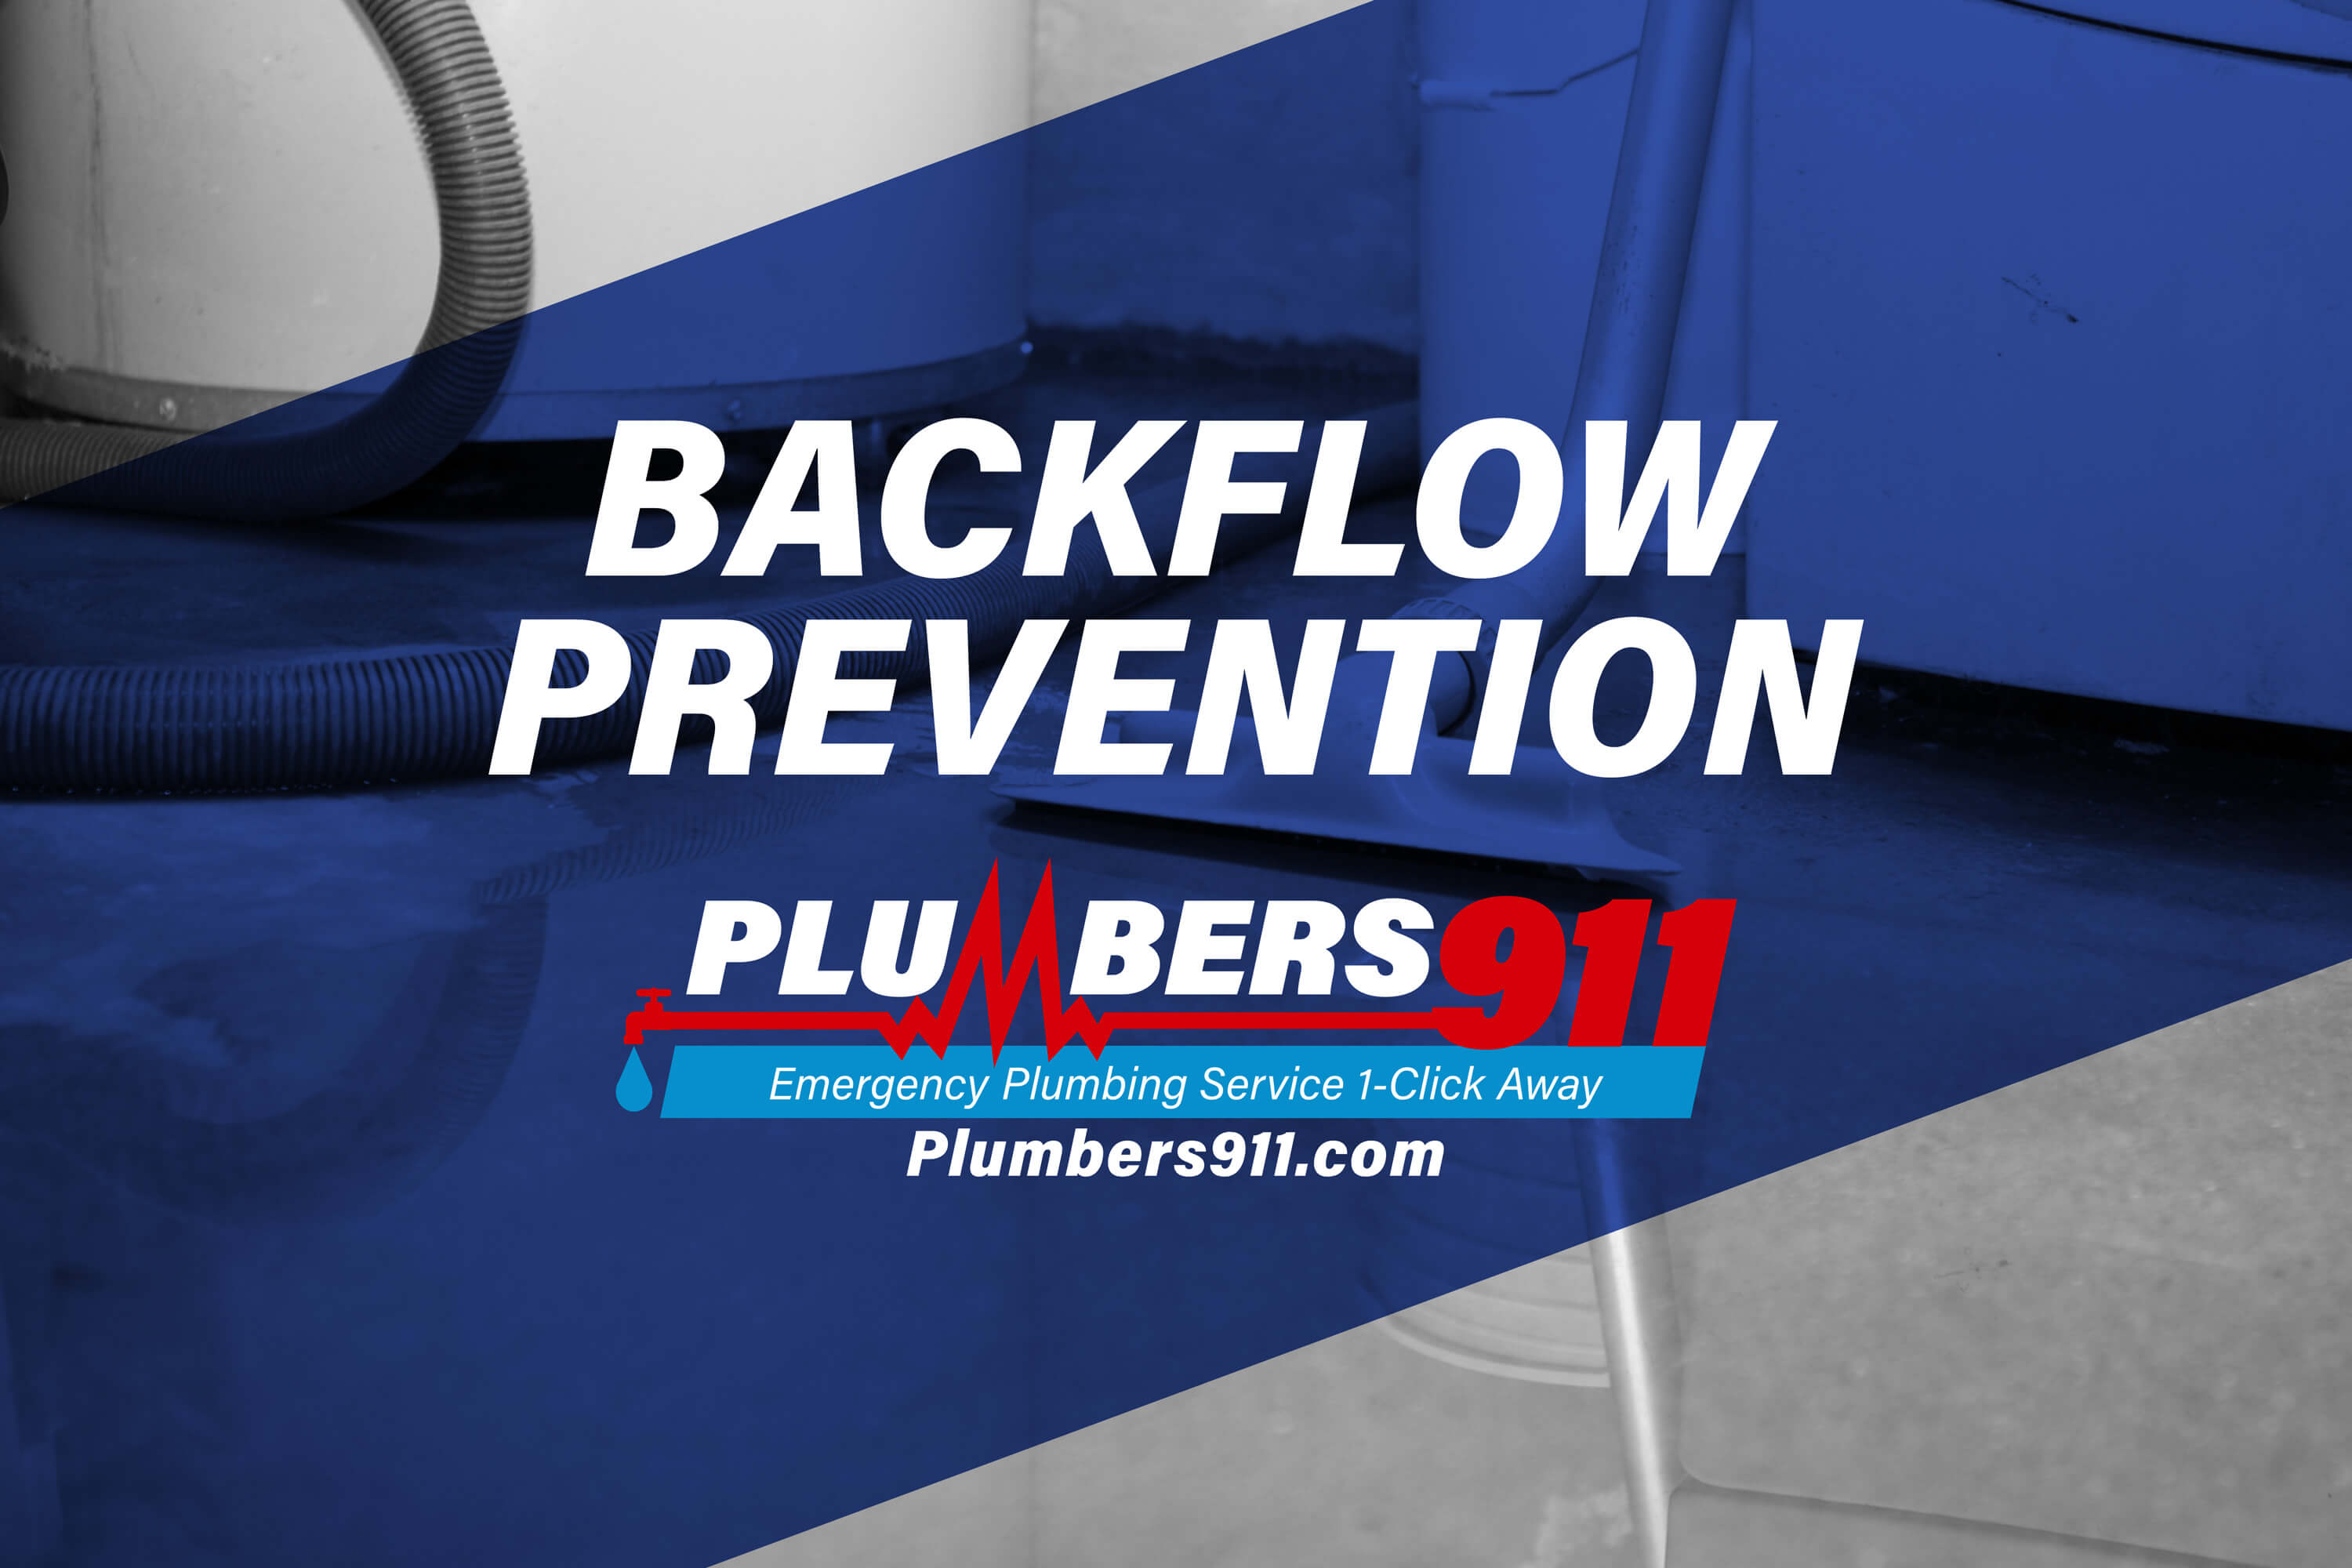 Plumbers 911 - Emergency Plumbing Services - Backflow Prevention